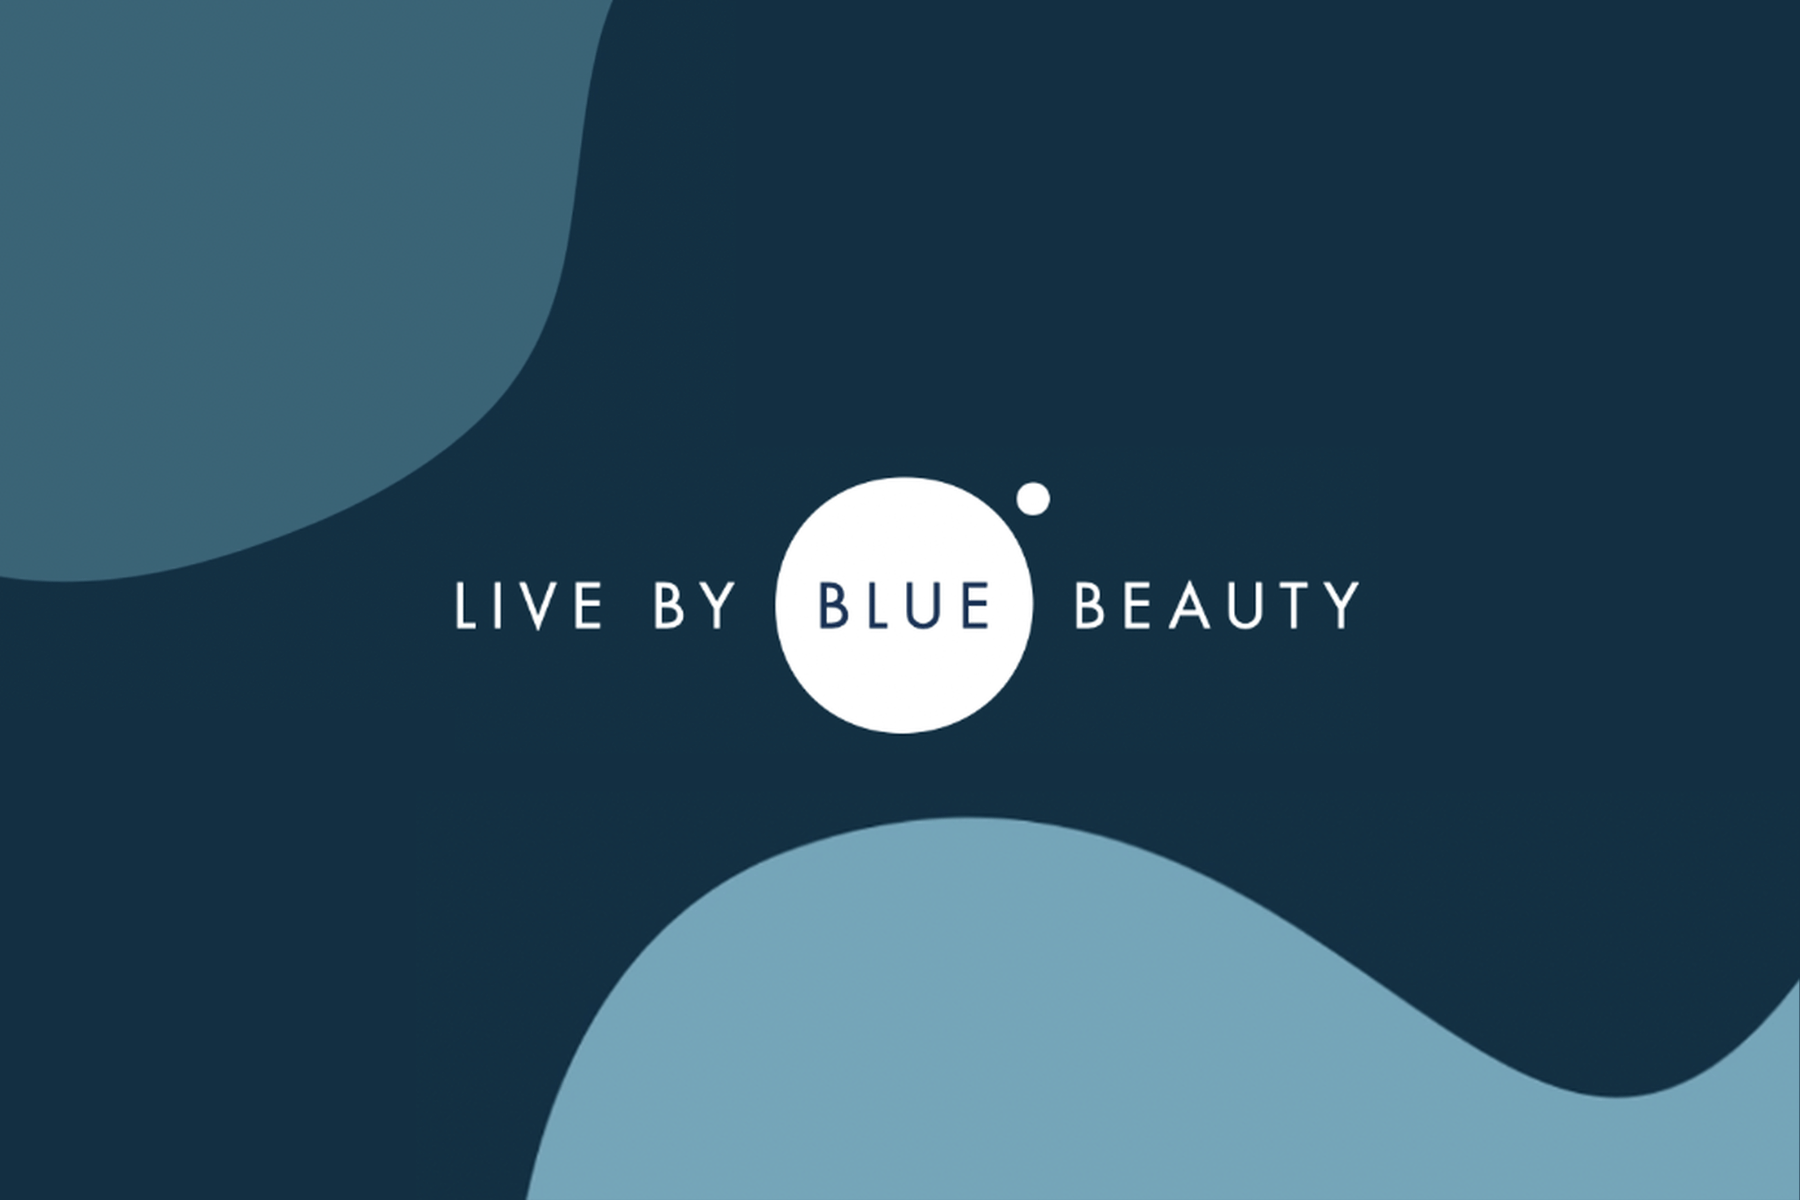 Live by blue beauty